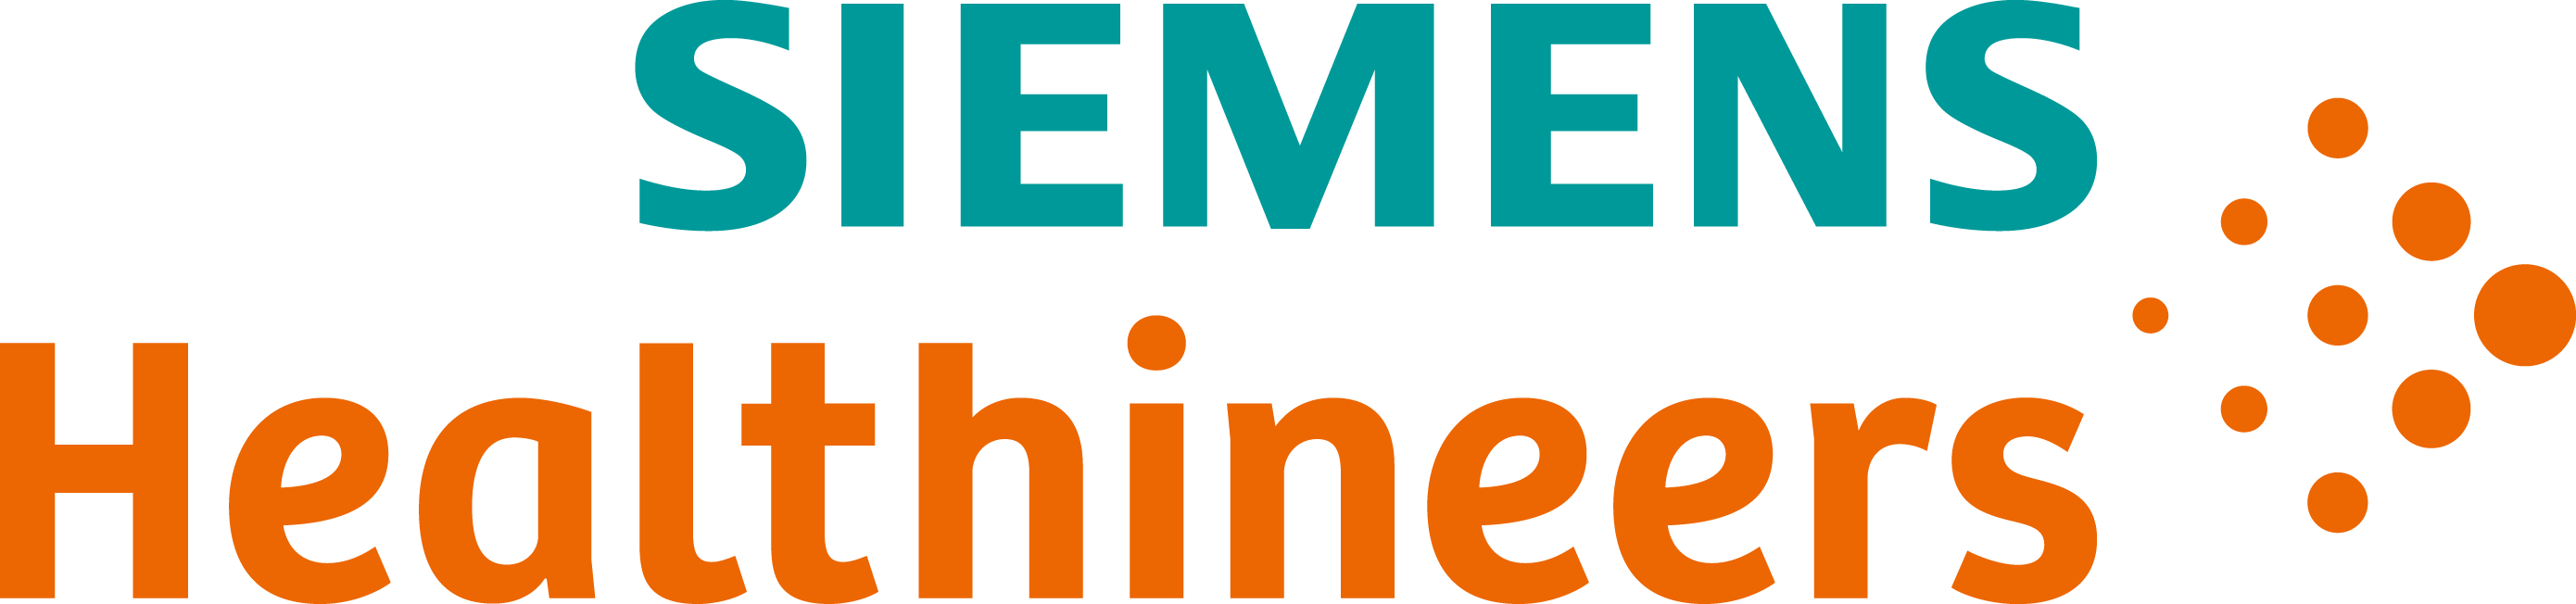 Logo exposant SIEMENS HEALTHINEERS